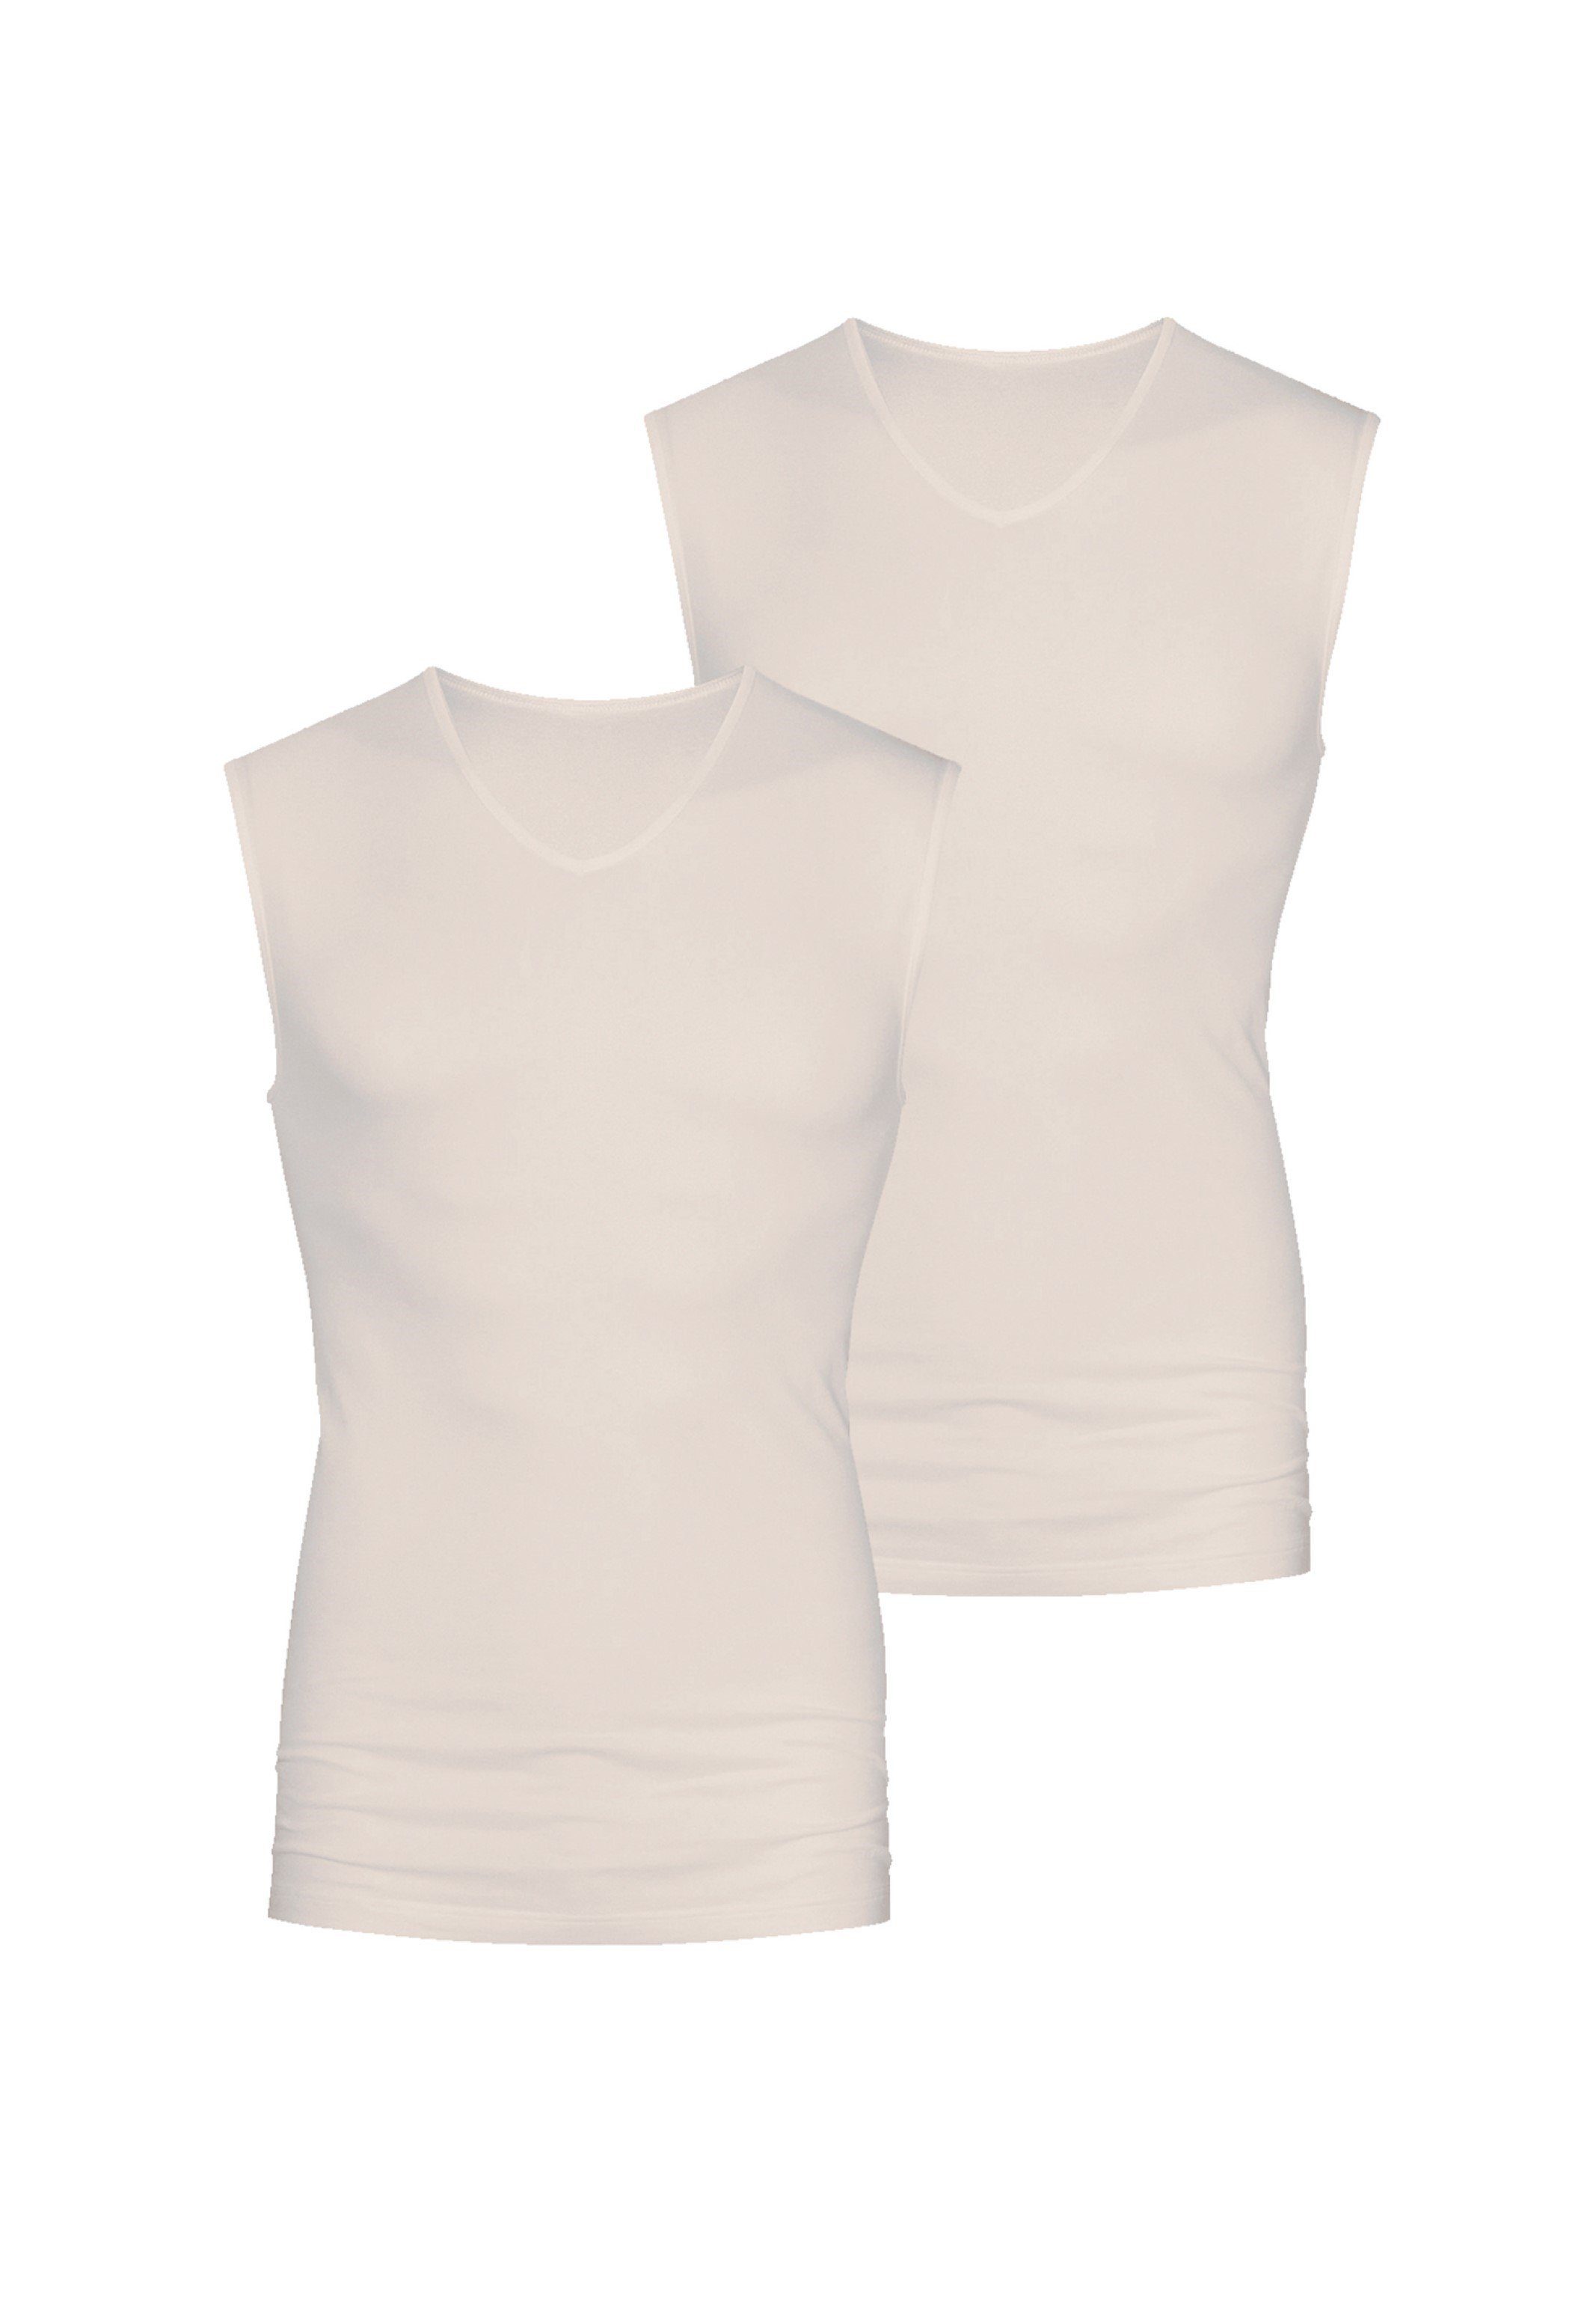 Wäsche/Bademode Unterhemden Mey Unterhemd 2er Pack Dry Cotton (2 Stück), Muskel Shirt - Unterhemd - Baumwolle - Körpernahe Passf